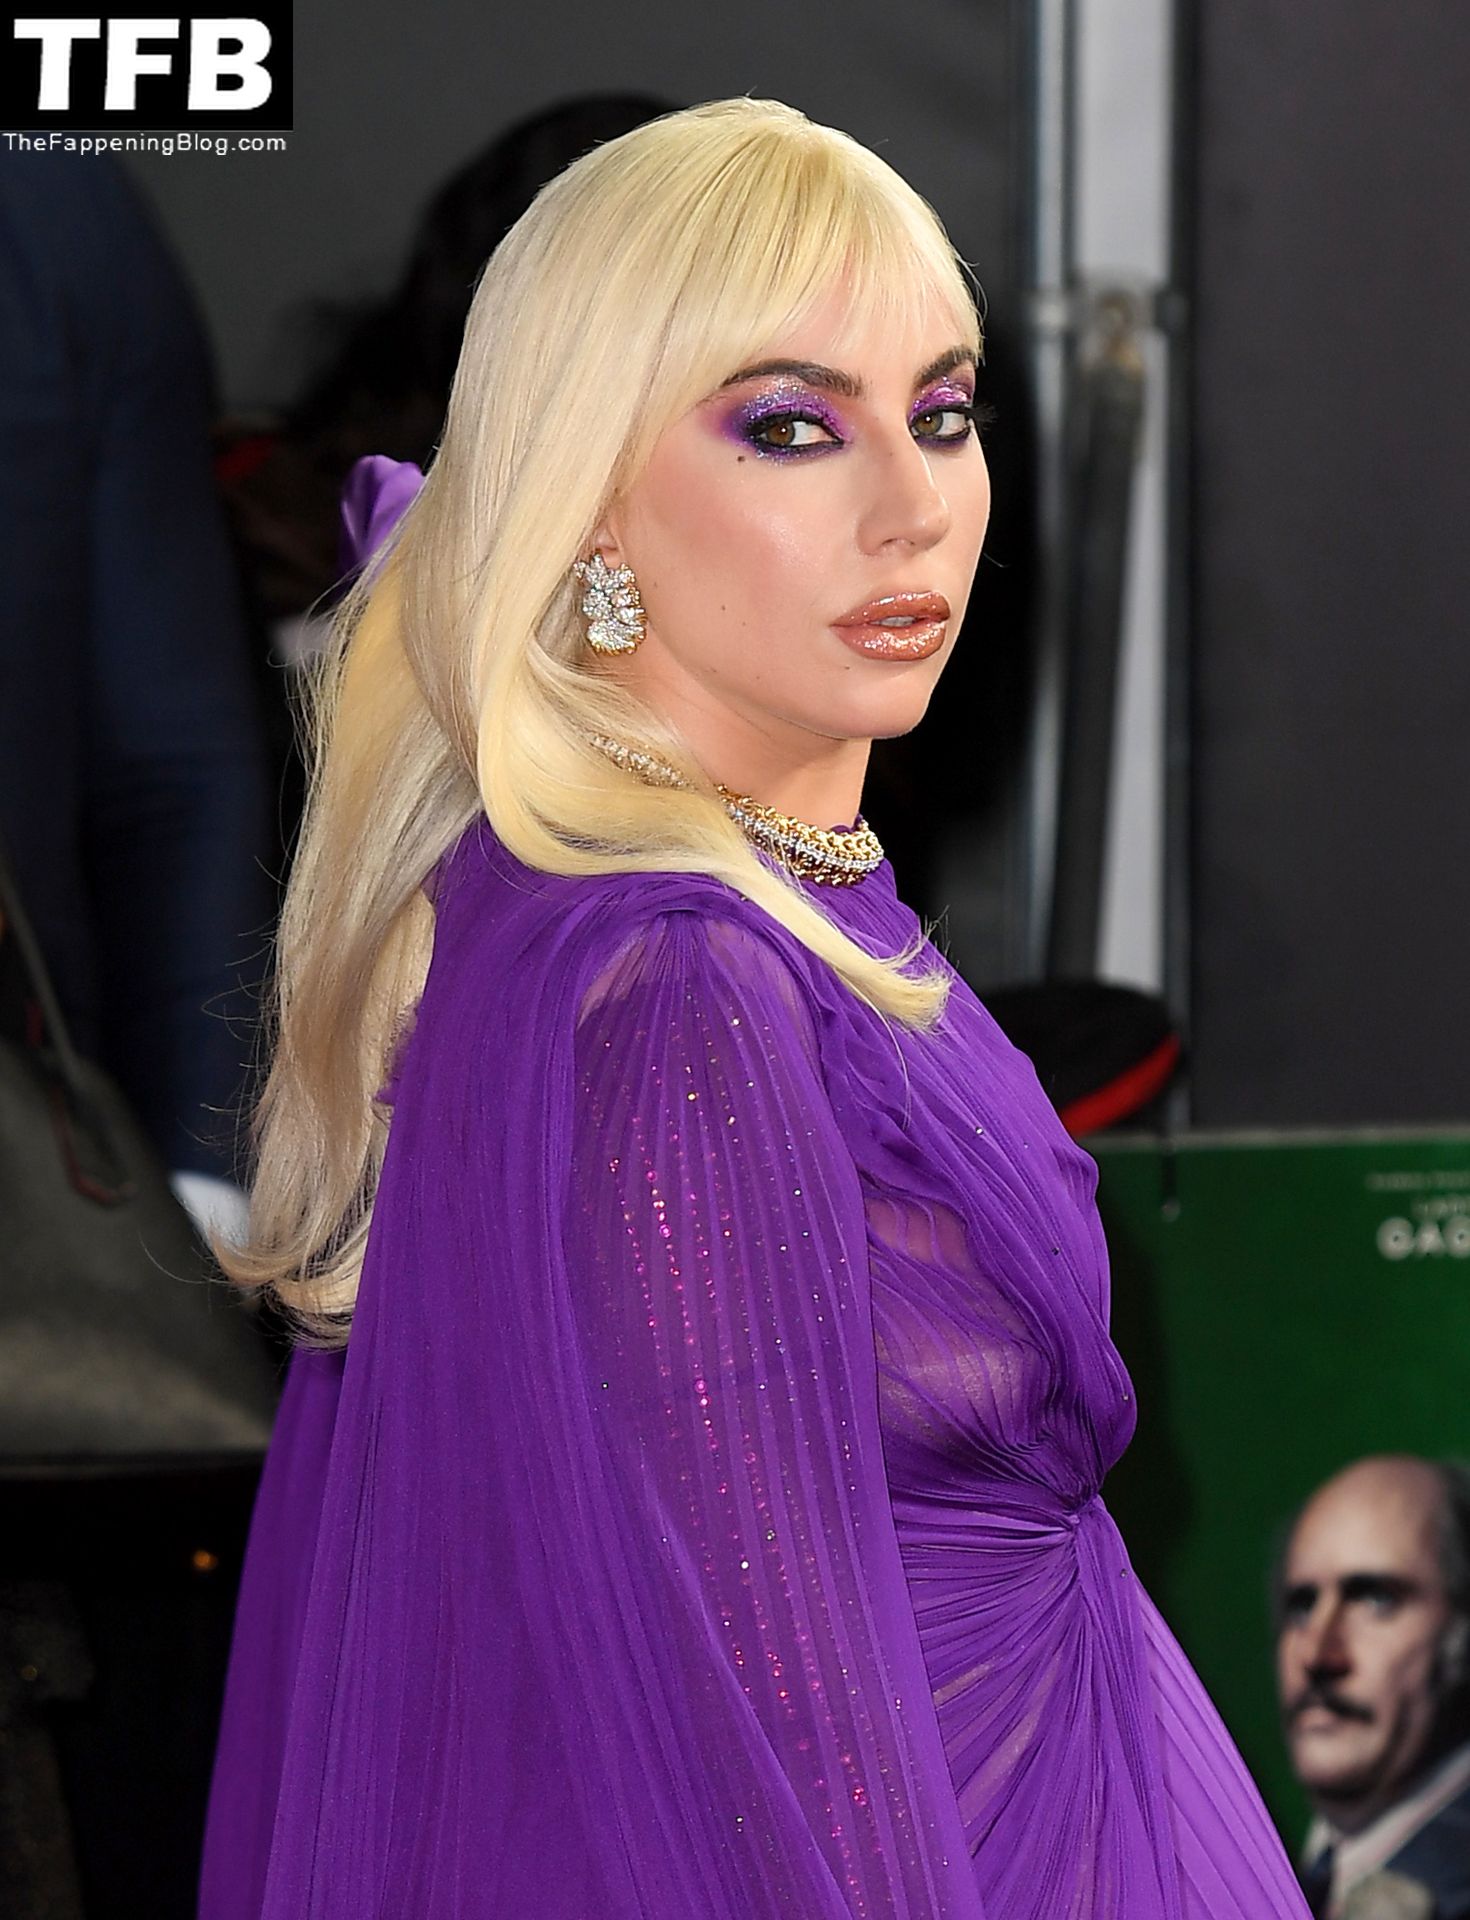 Lady-Gaga-Sexy-The-Fappening-Blog-99.jpg